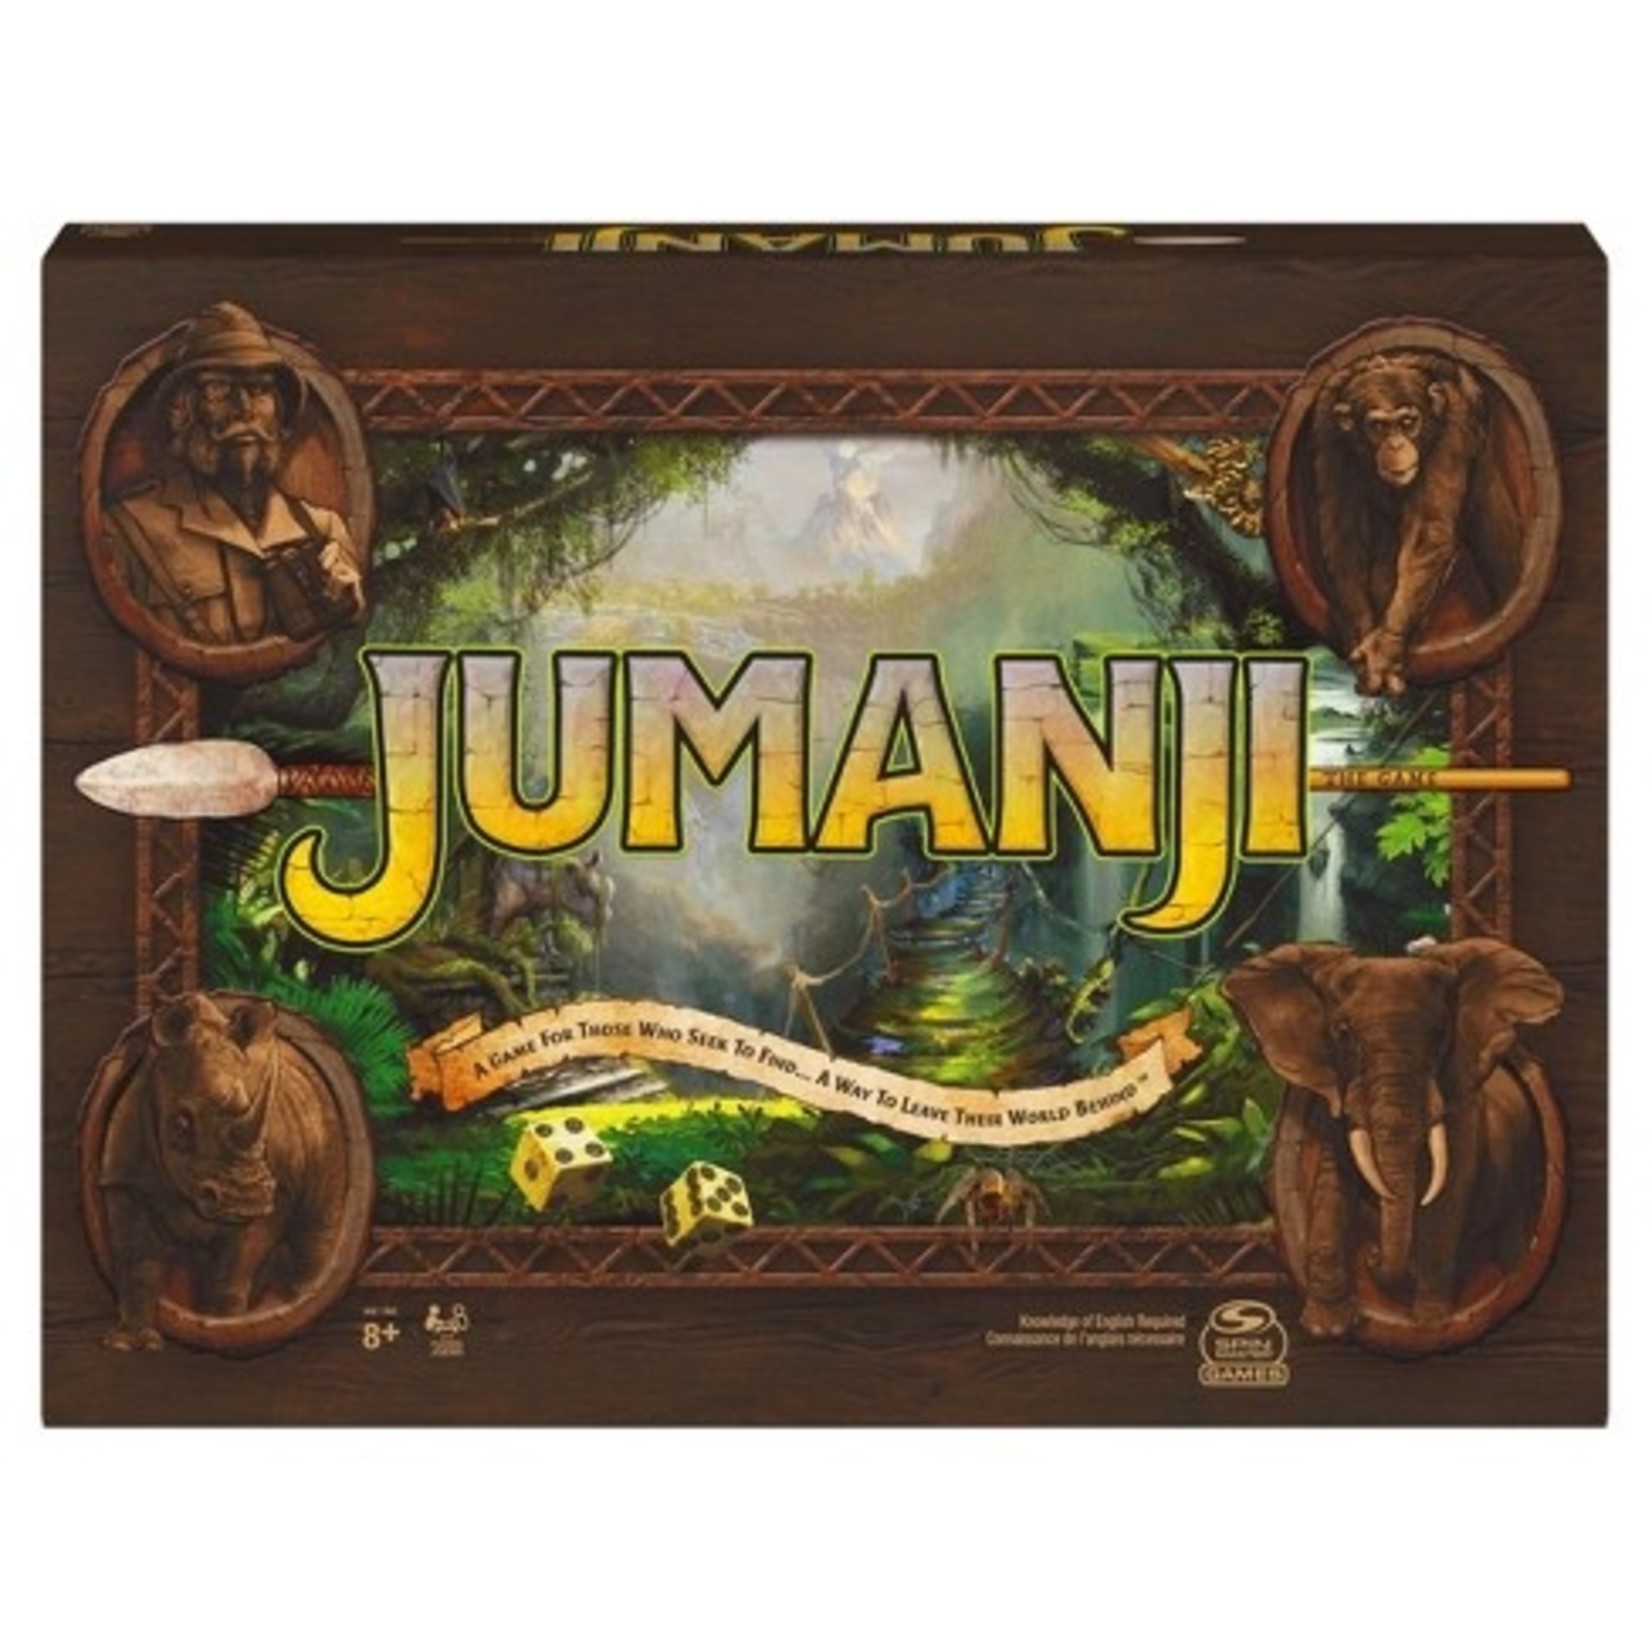 Spinmaster Jumanji Board Game